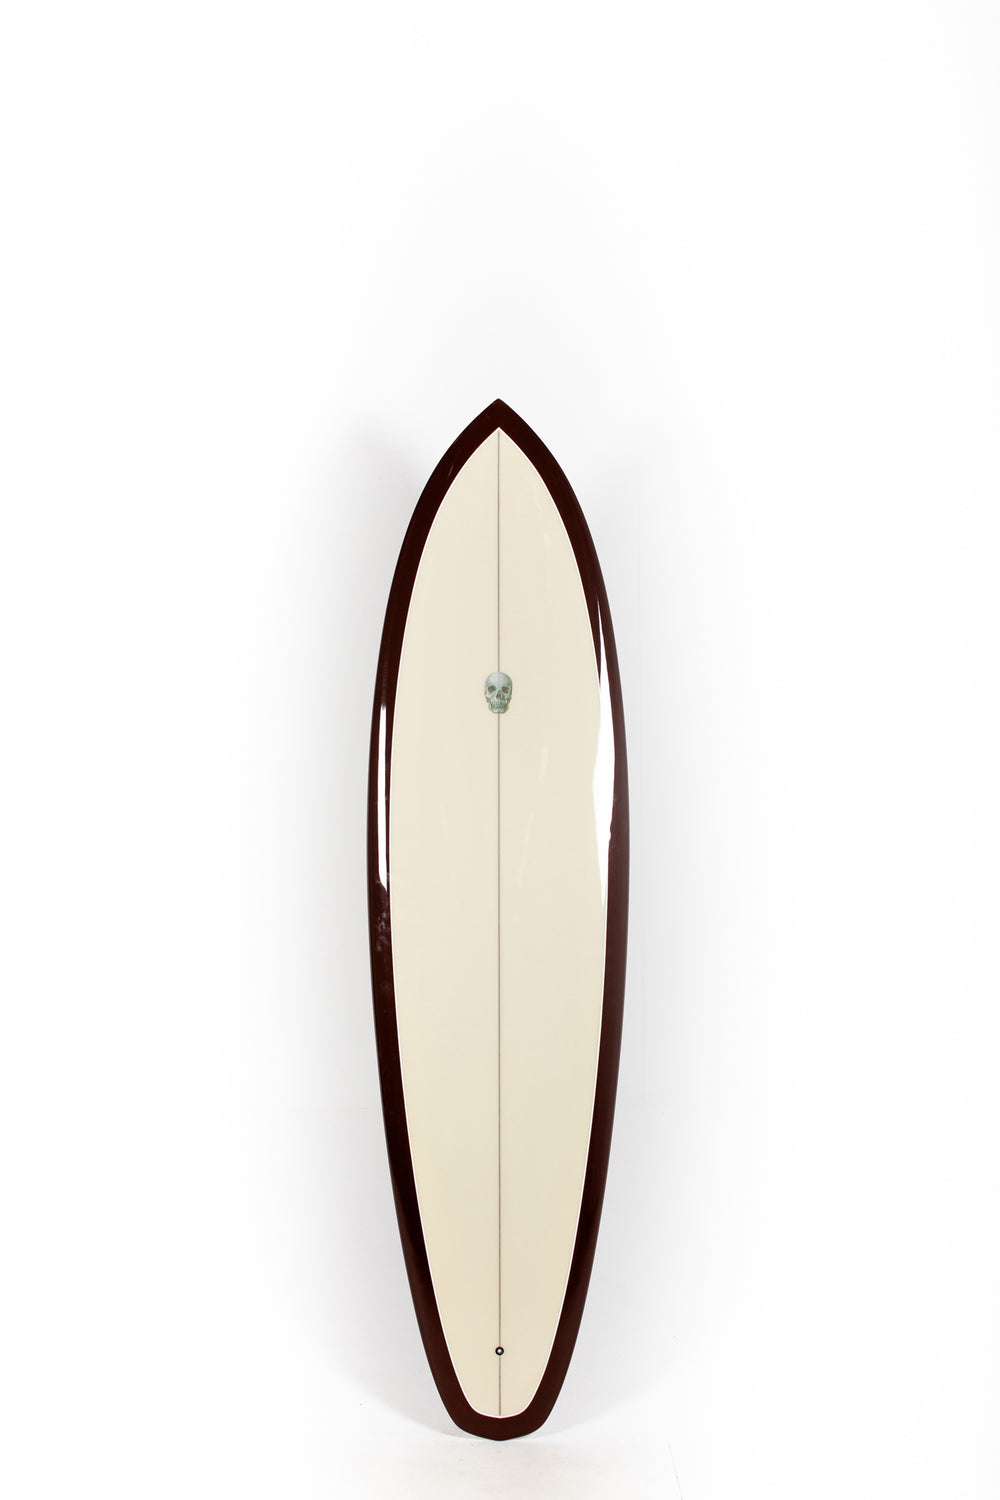 Pukas Surf Shop - Christenson Surfboards - ULTRA TRACKER - 6'10